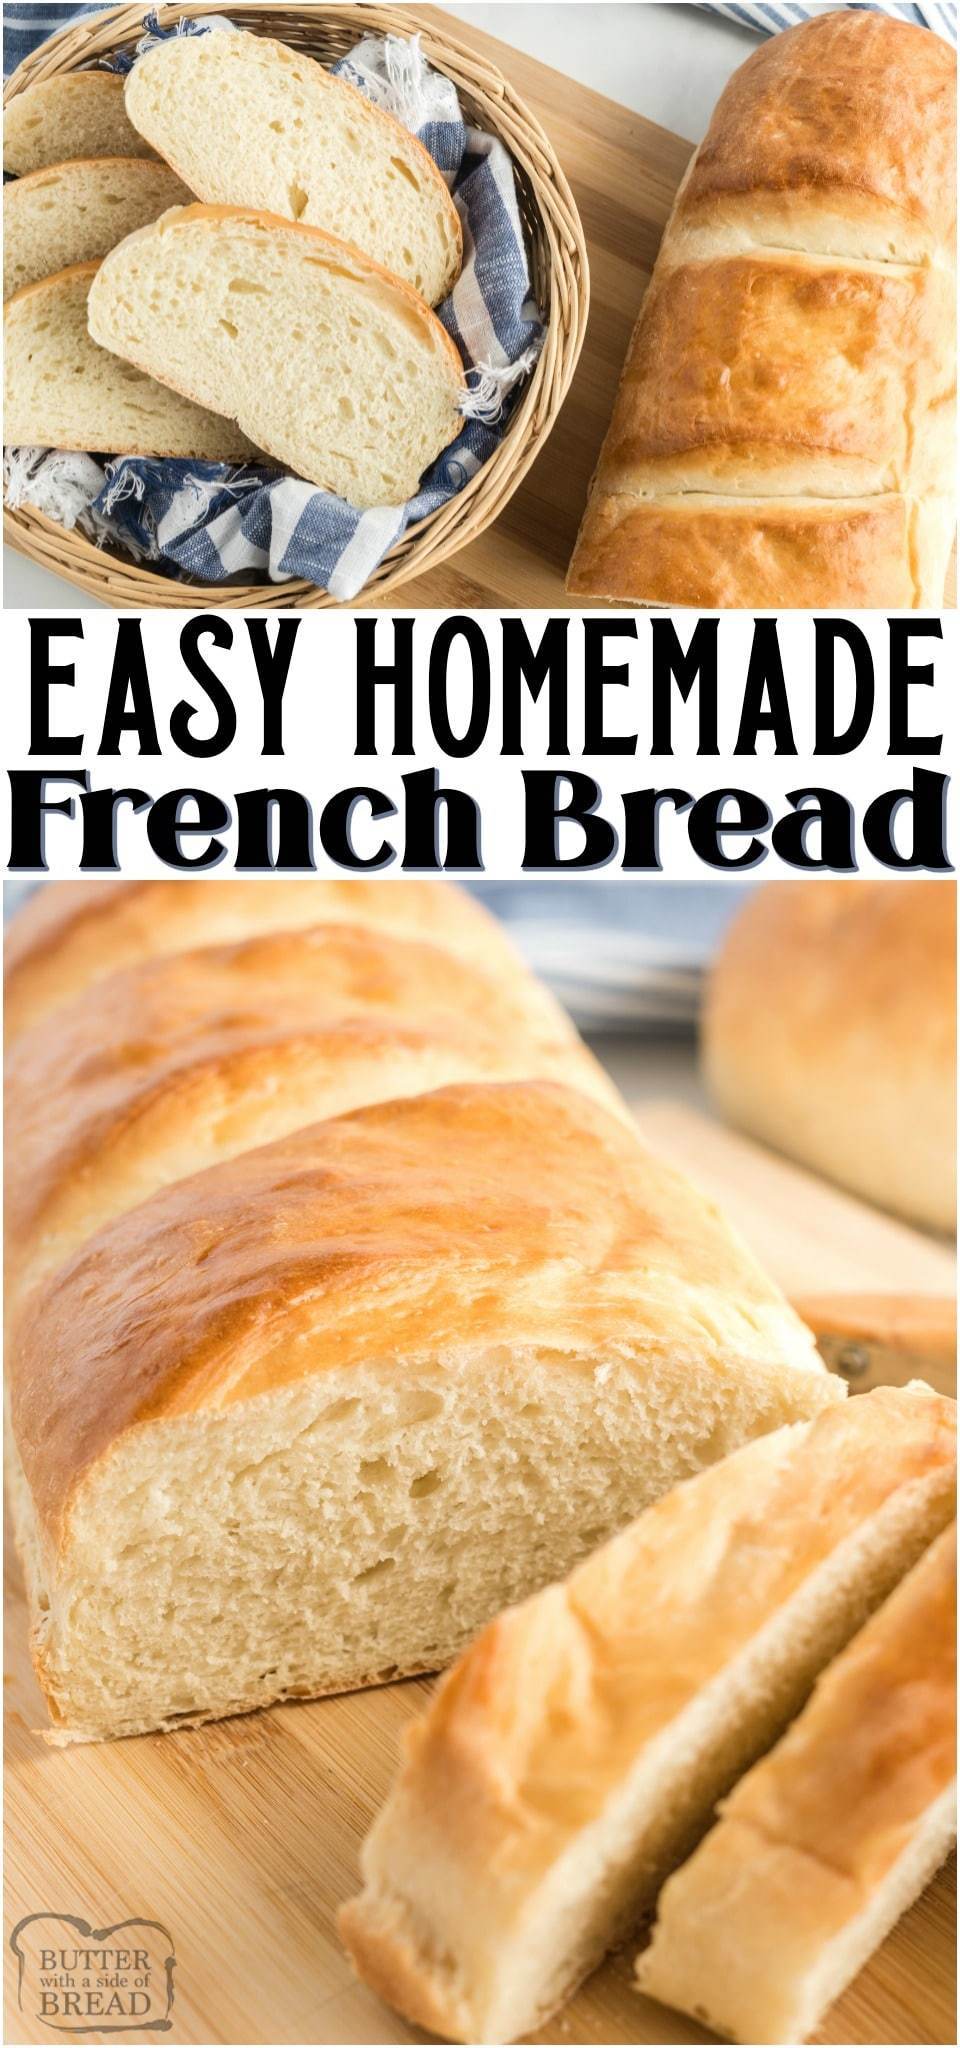 Easy Homemade French Bread recipe